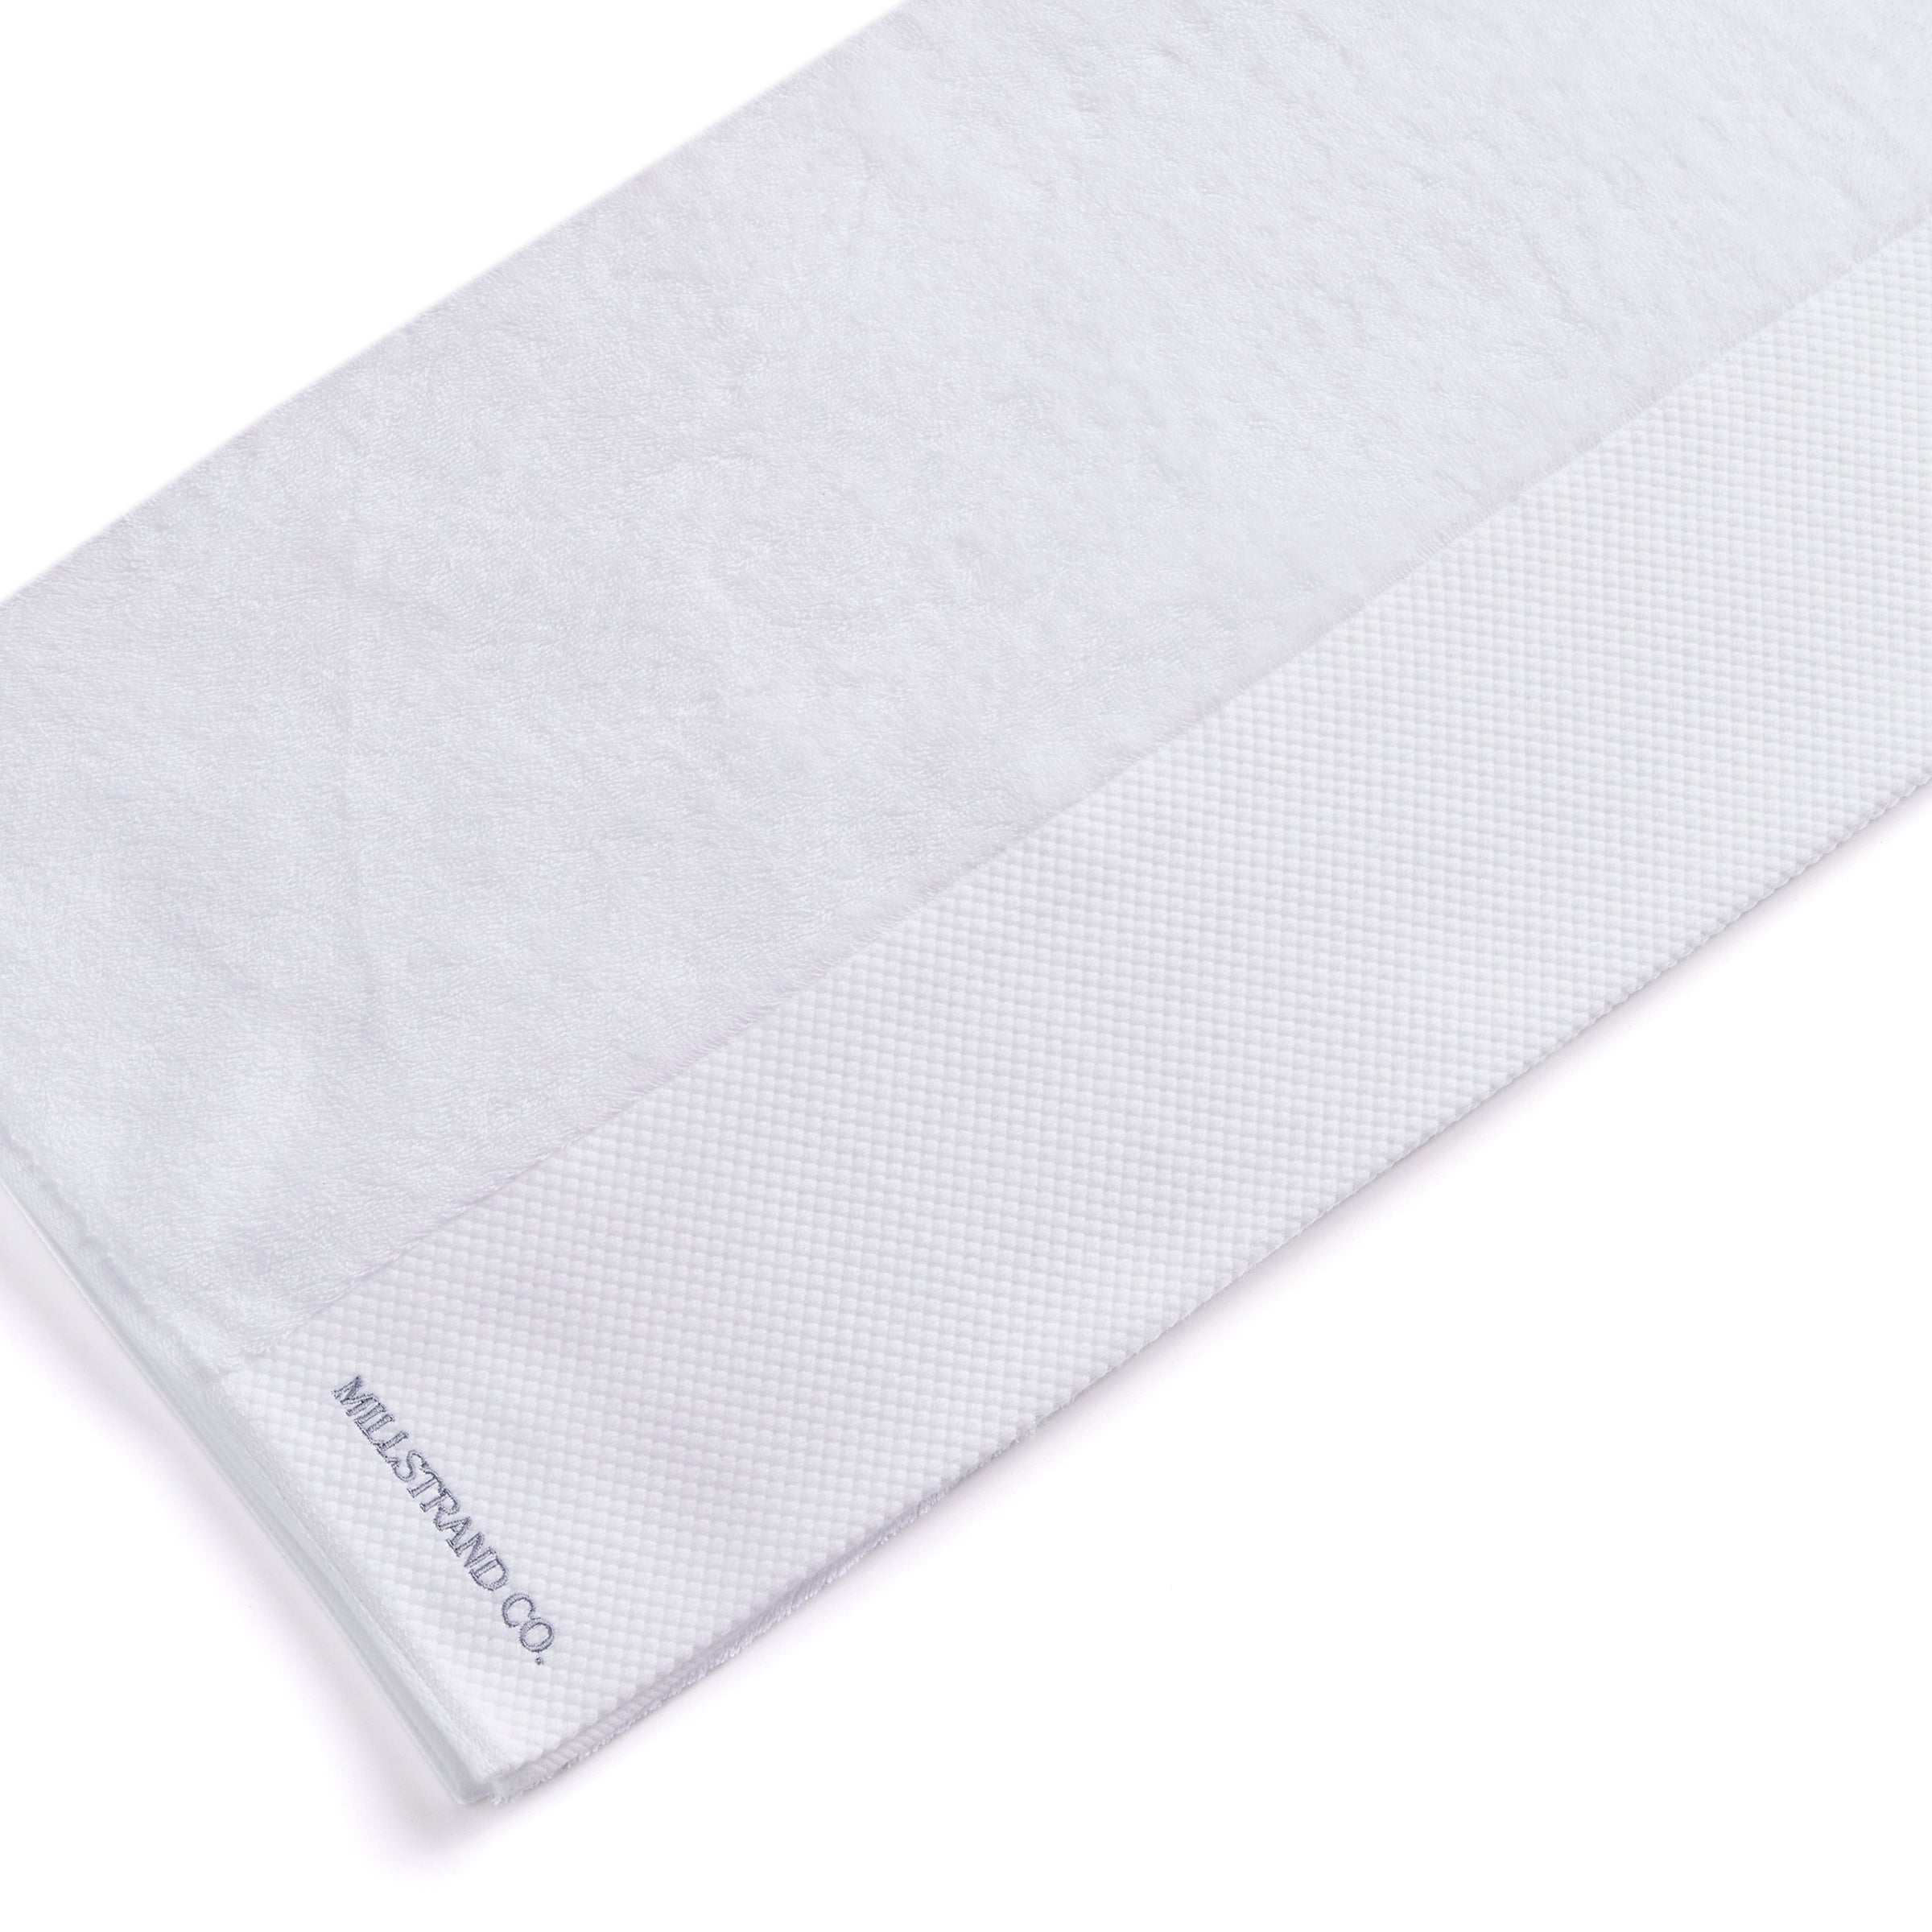 Millstrand Co. Lana Bath Towel Set in White Ivory